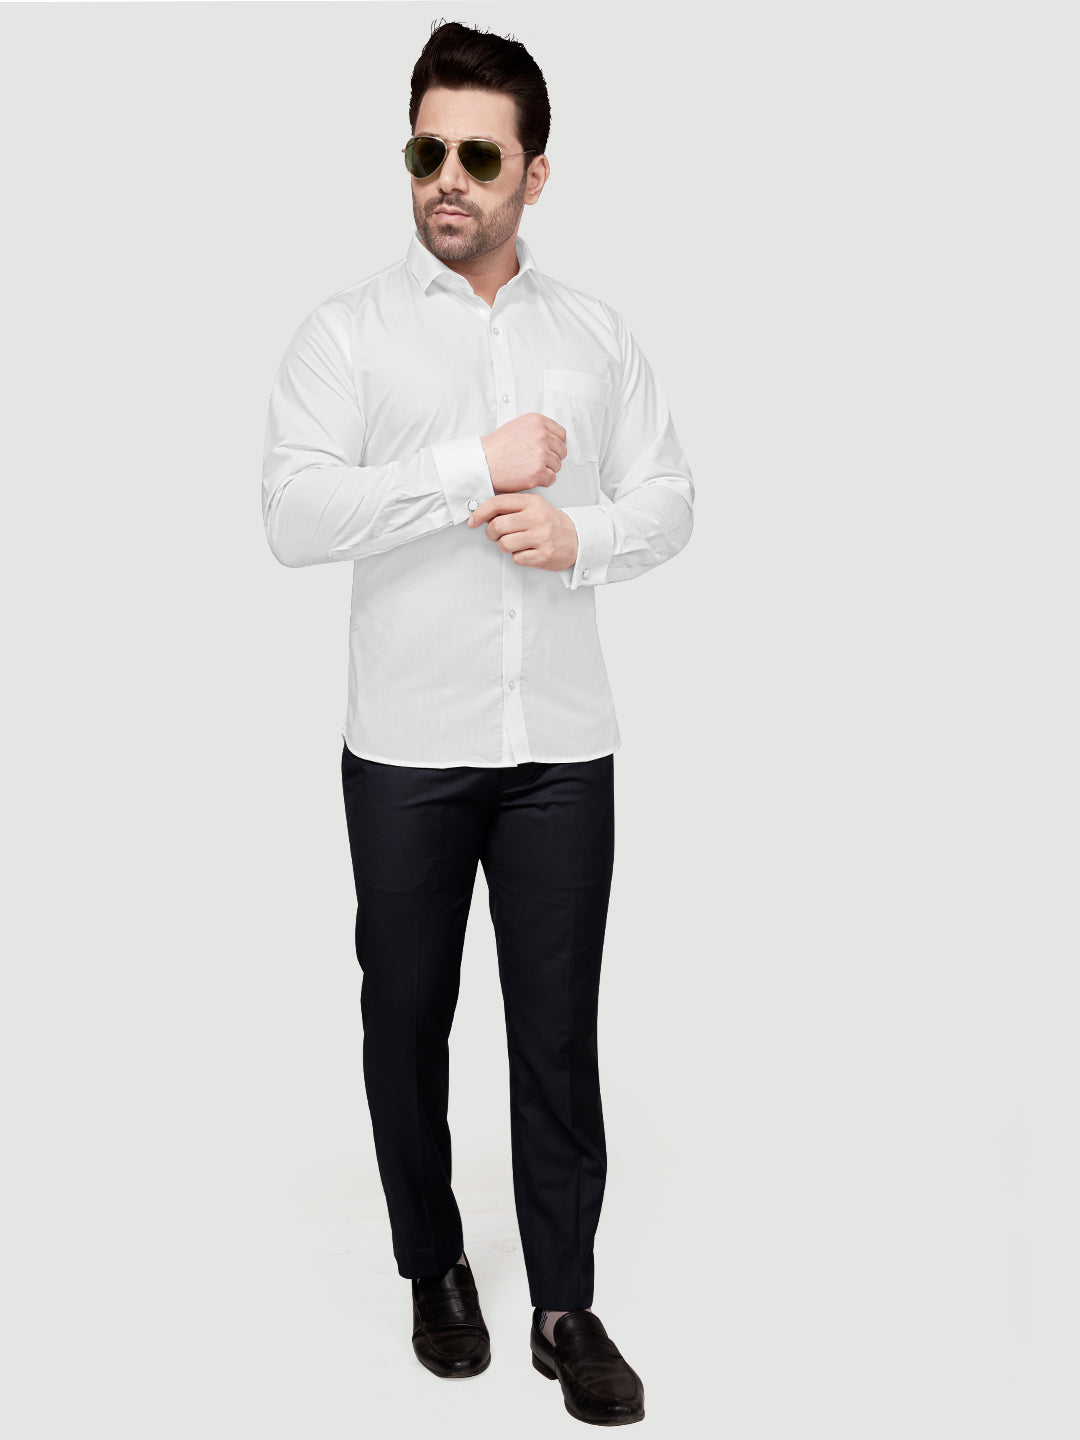 Black & White Men's Formal Cufflink Shirt White